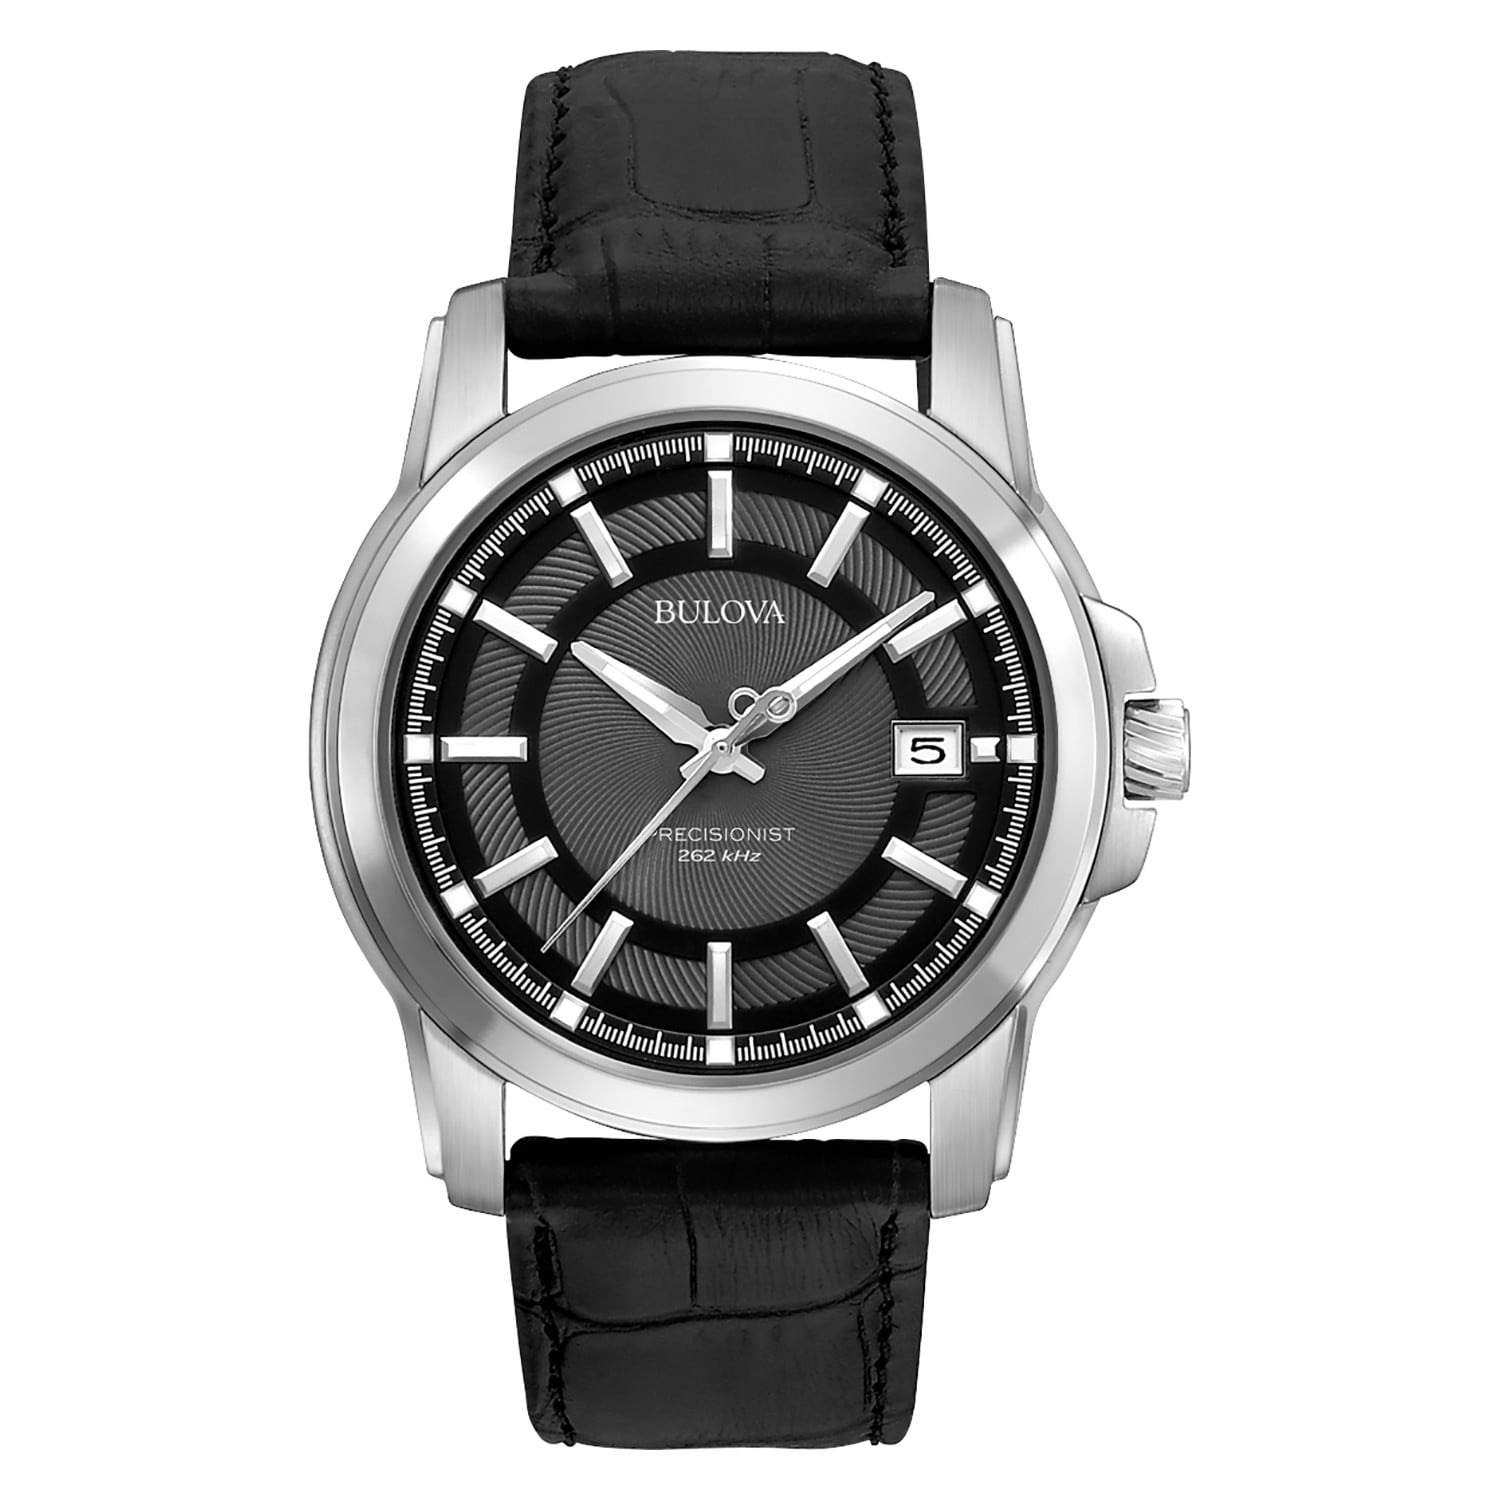 Bulova Men's Precisionist Stainless Steel Black Leather Strap Watch